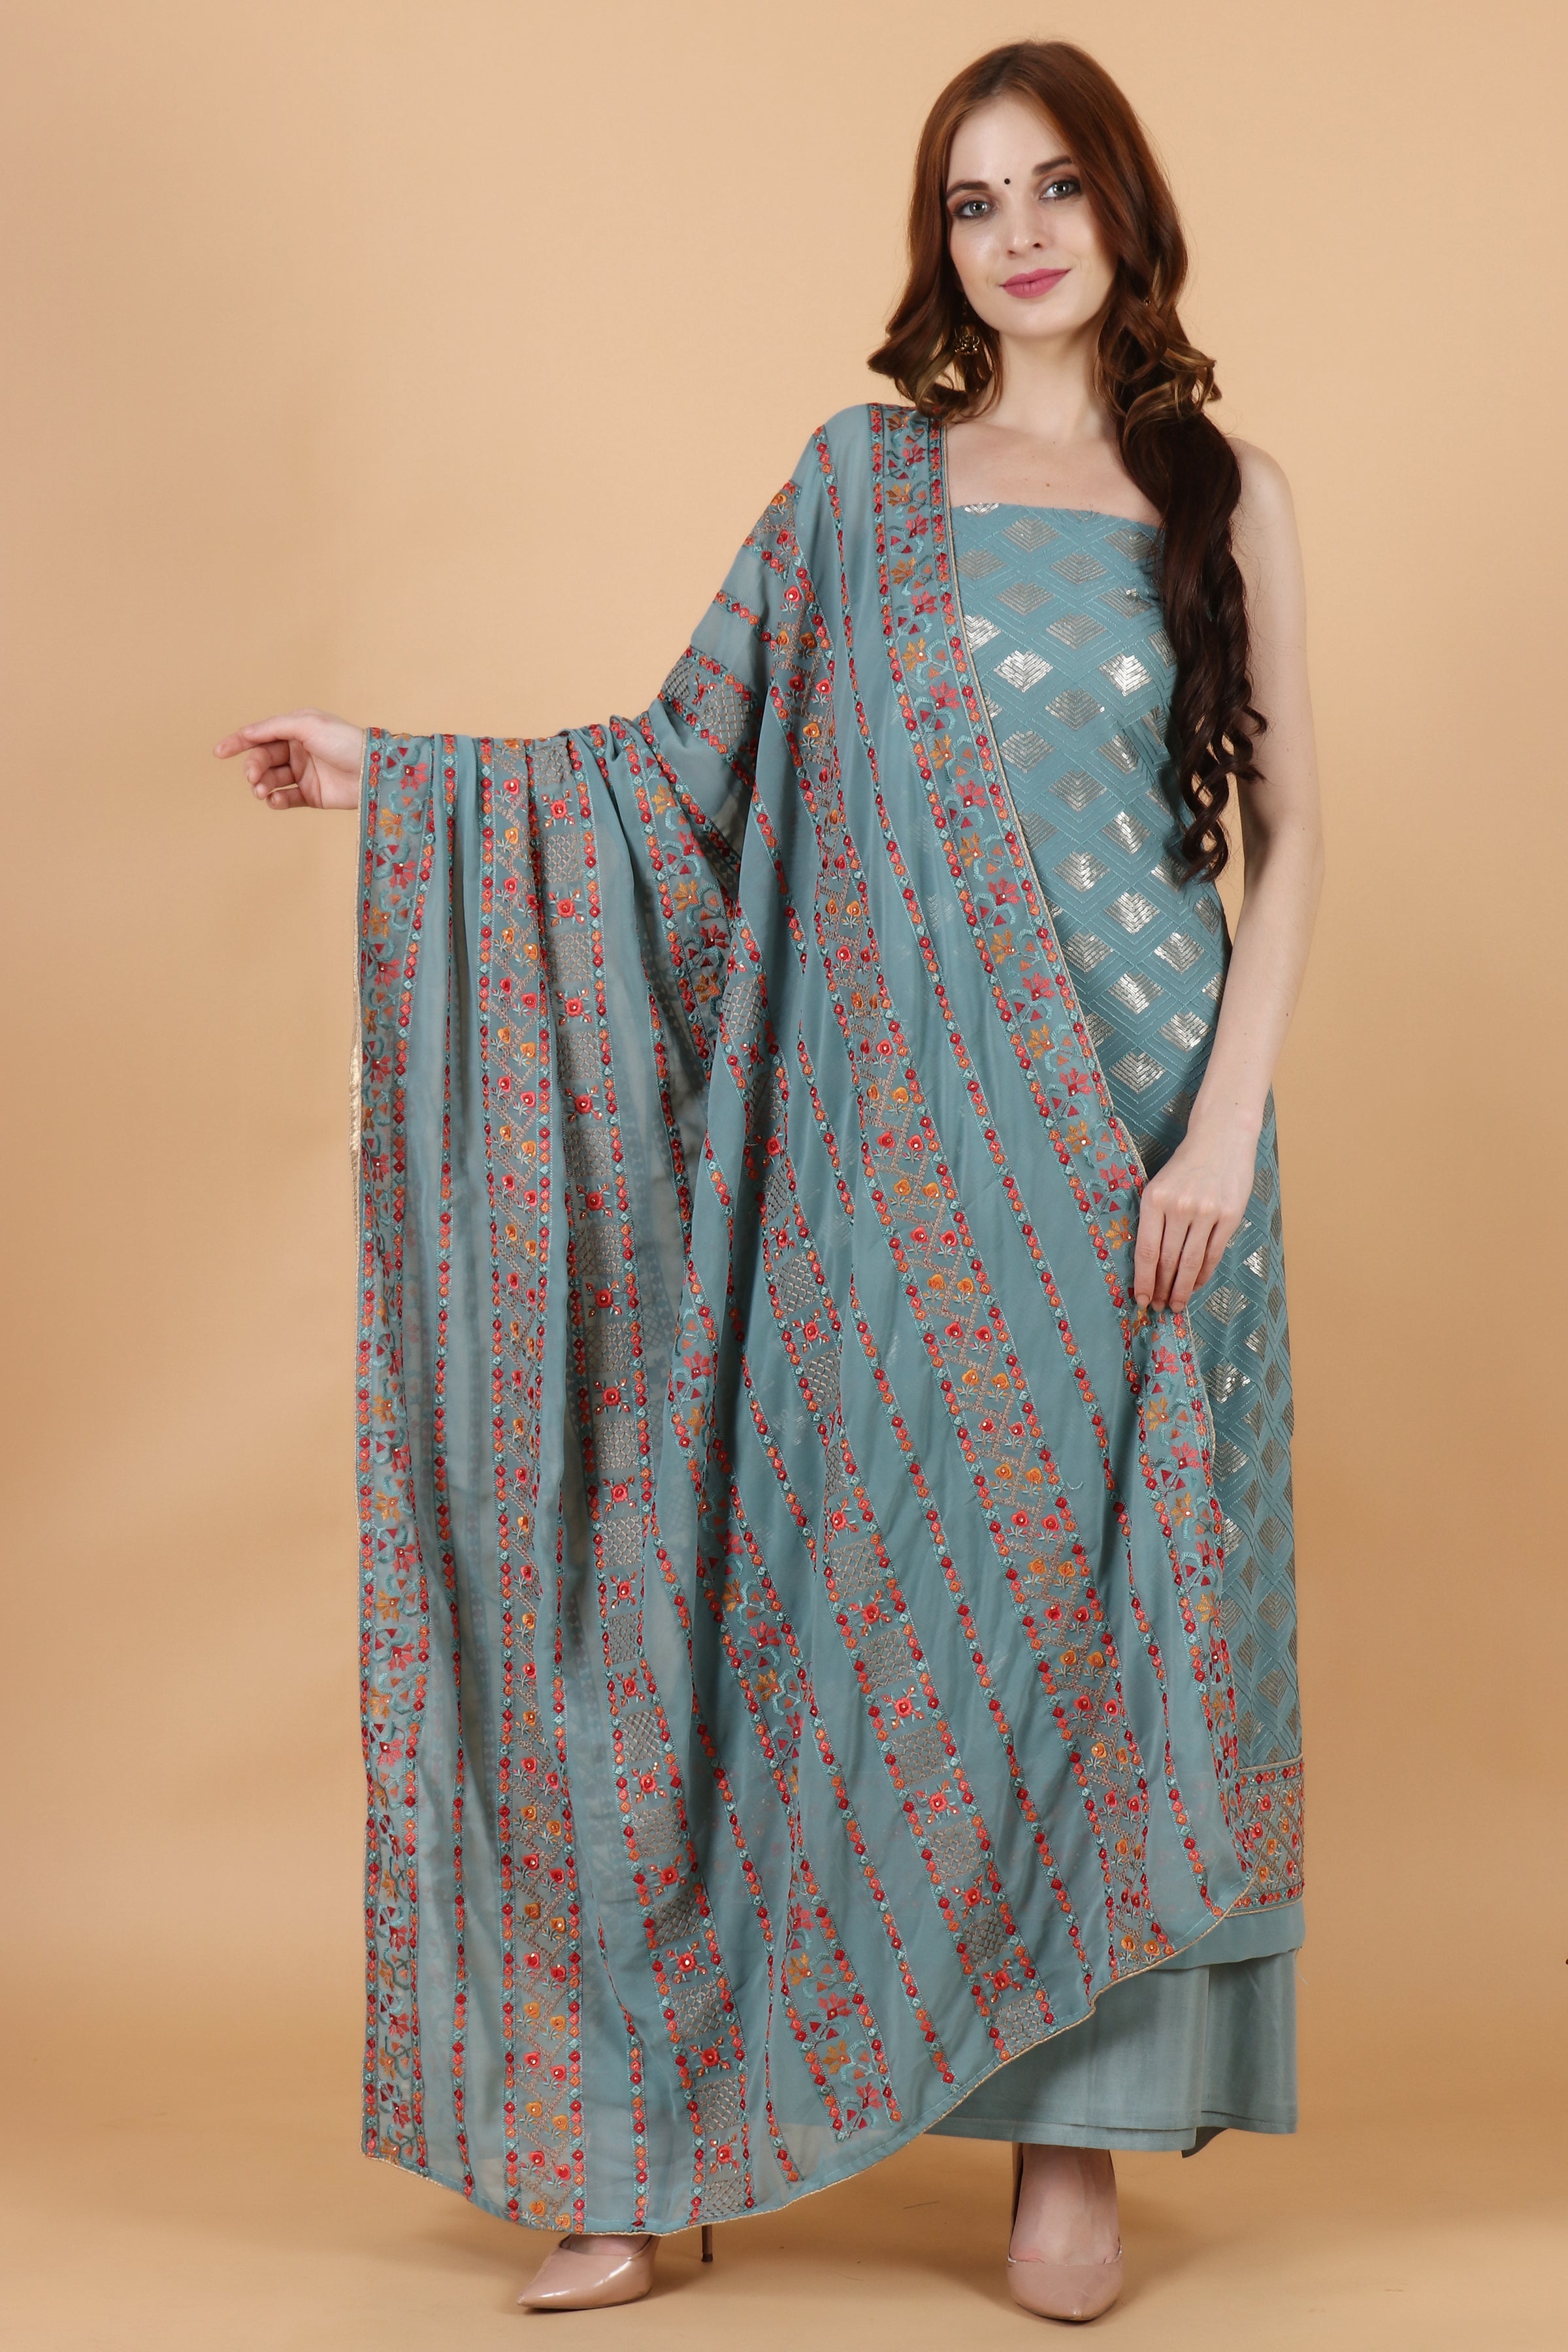 Buy FidgetGear georgette dress material for women green Chudidhar Material  Salwar kameez at Amazon.in